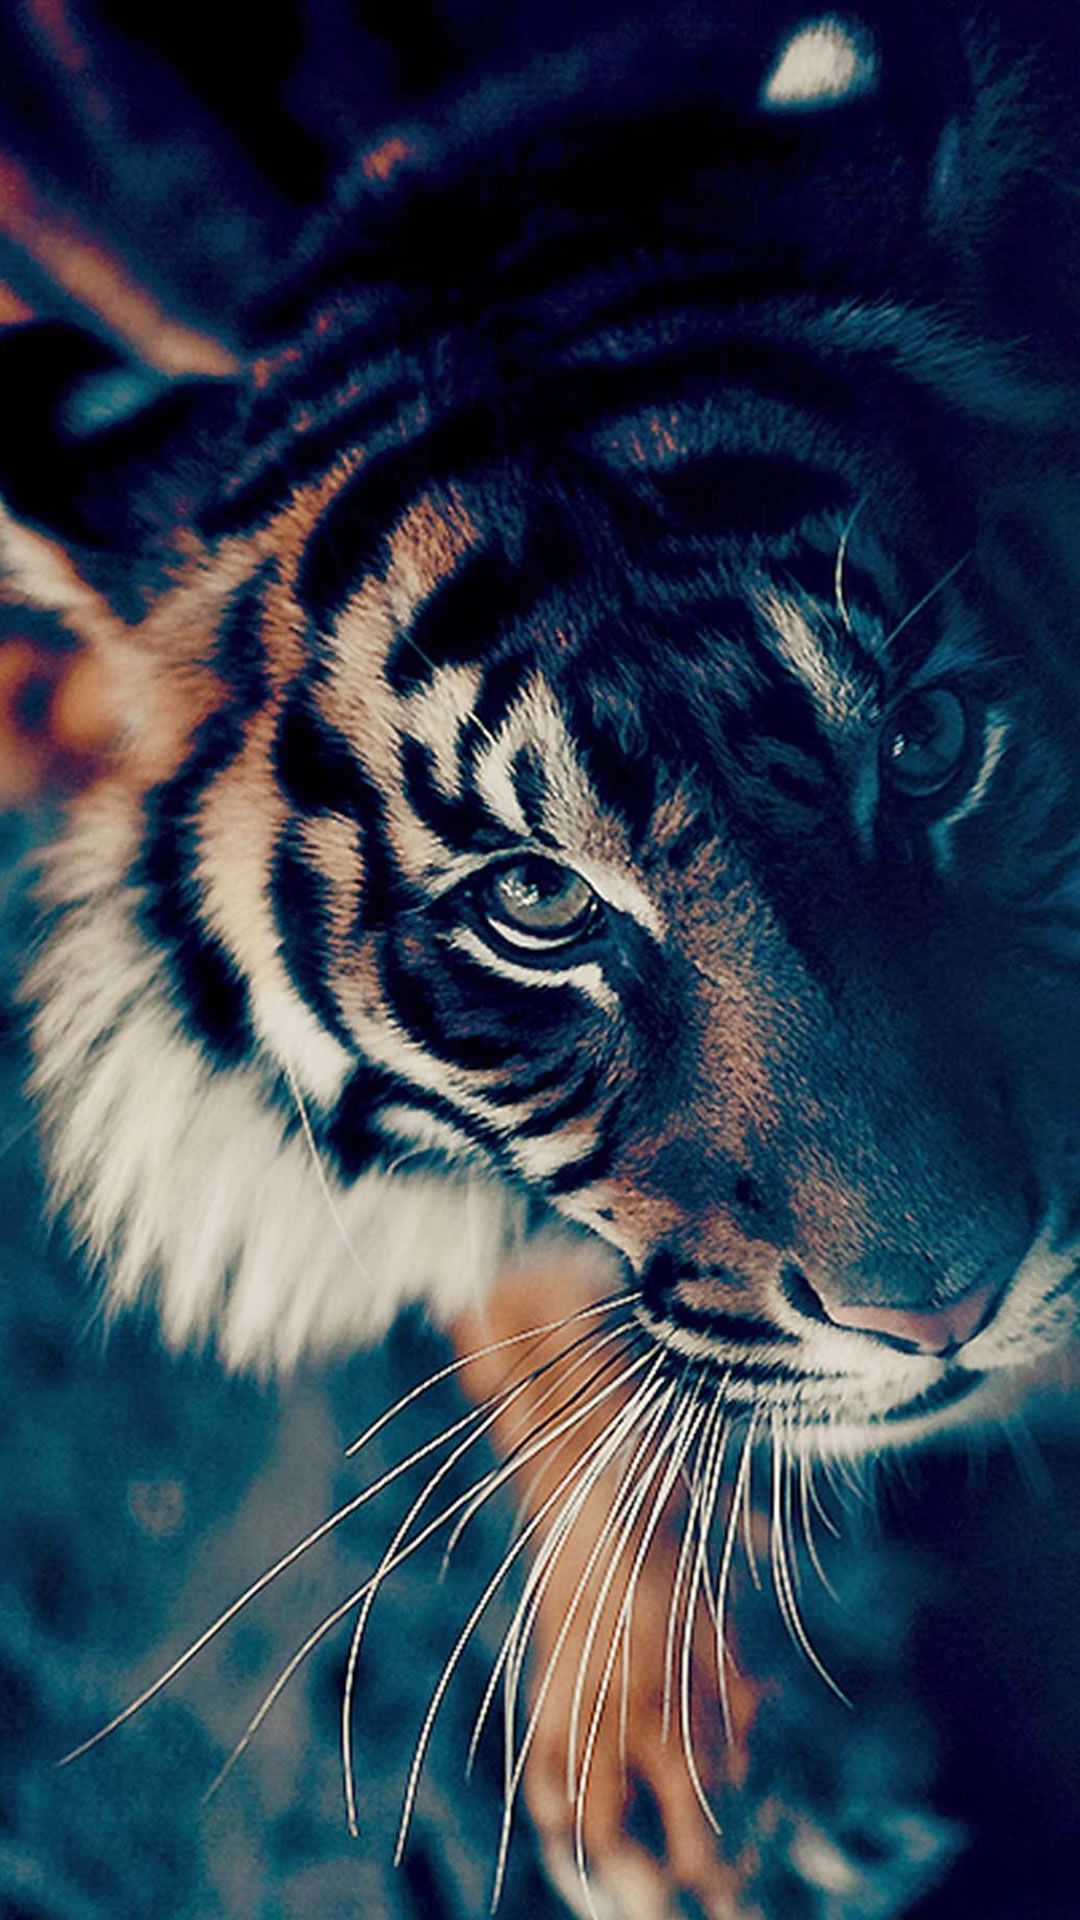 Bengal Tiger Closeup iPhone 6 Wallpaper Download. iPhone